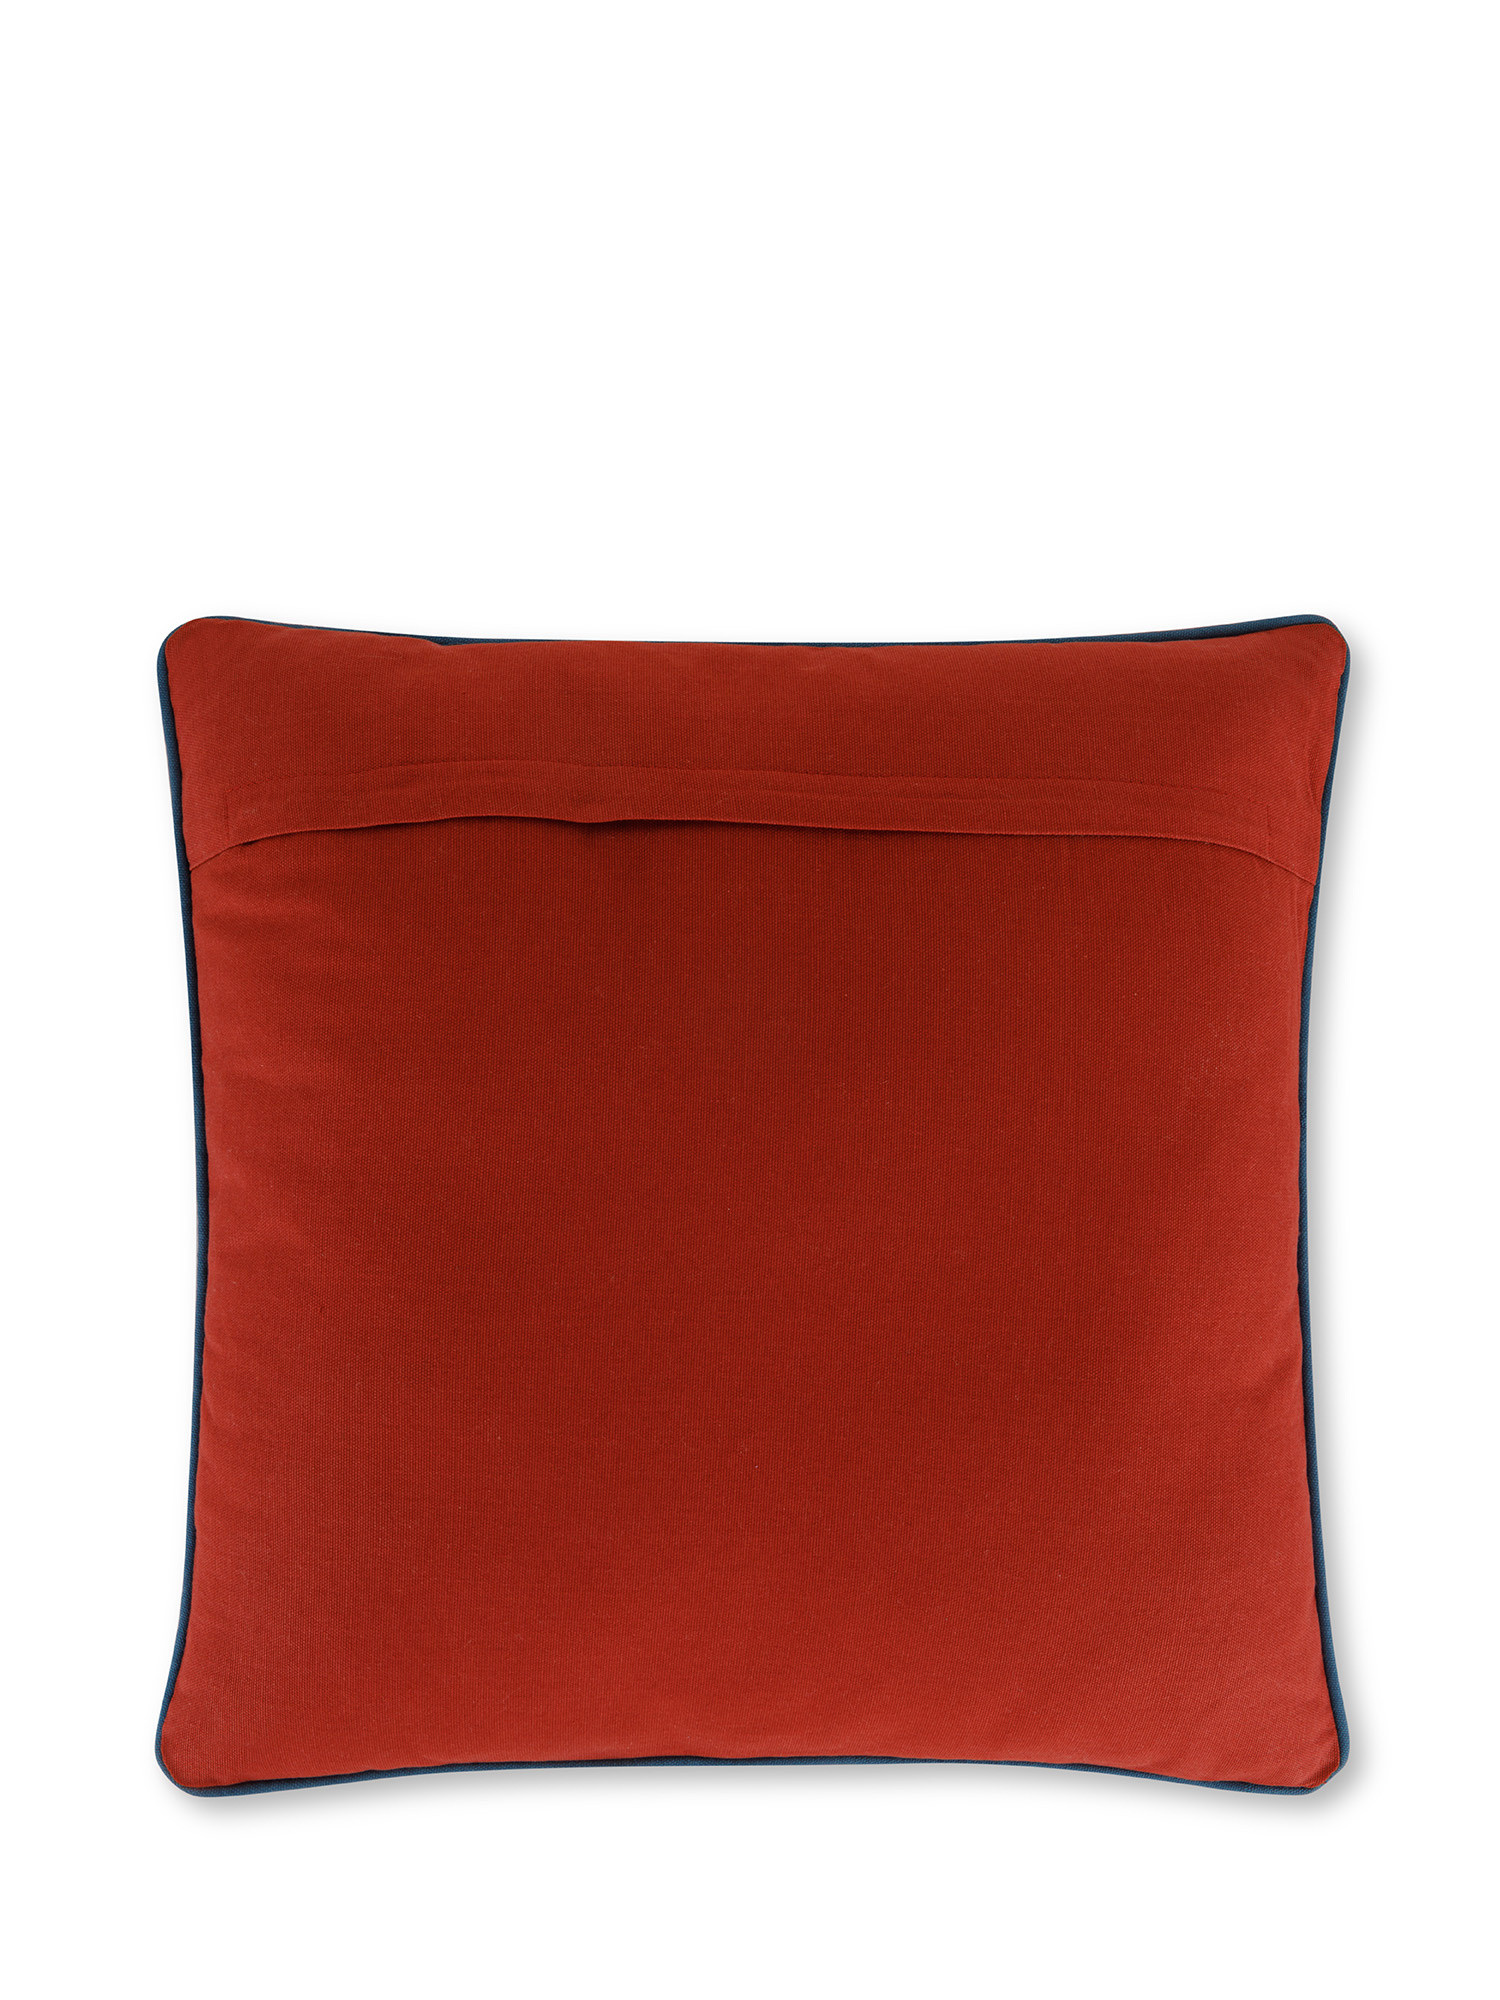 Cuscino in tessuto ricamato con fiori 45x45 cm, Rosso, large image number 1